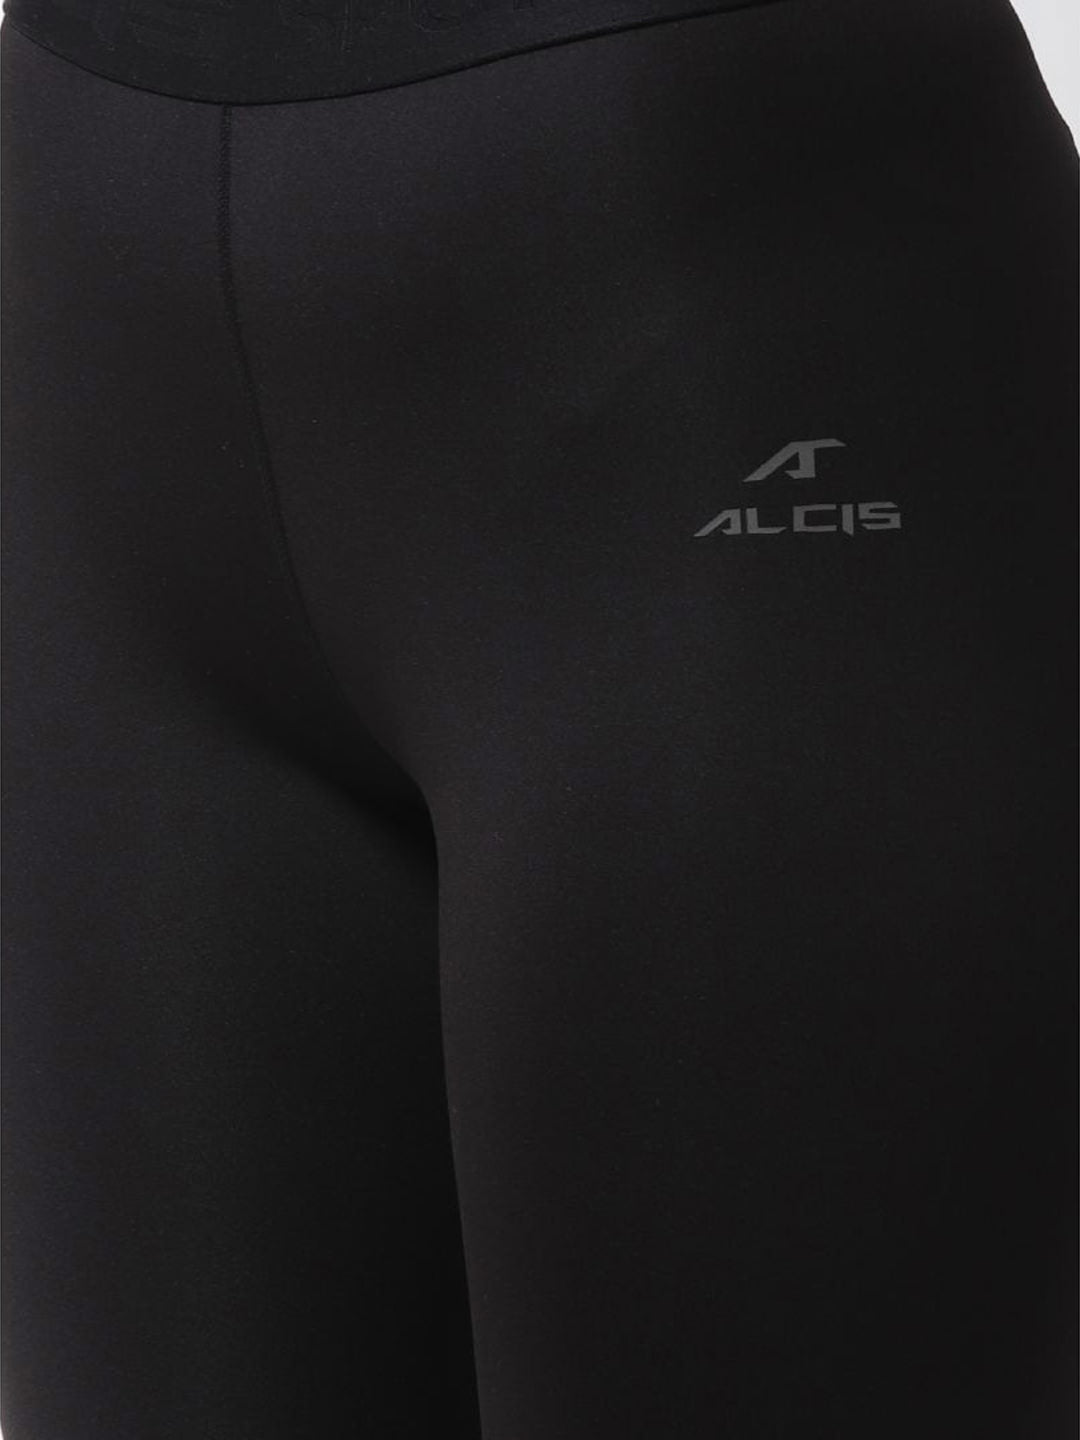 Alcis Women Black Solid 3/4th Compression Training Tights